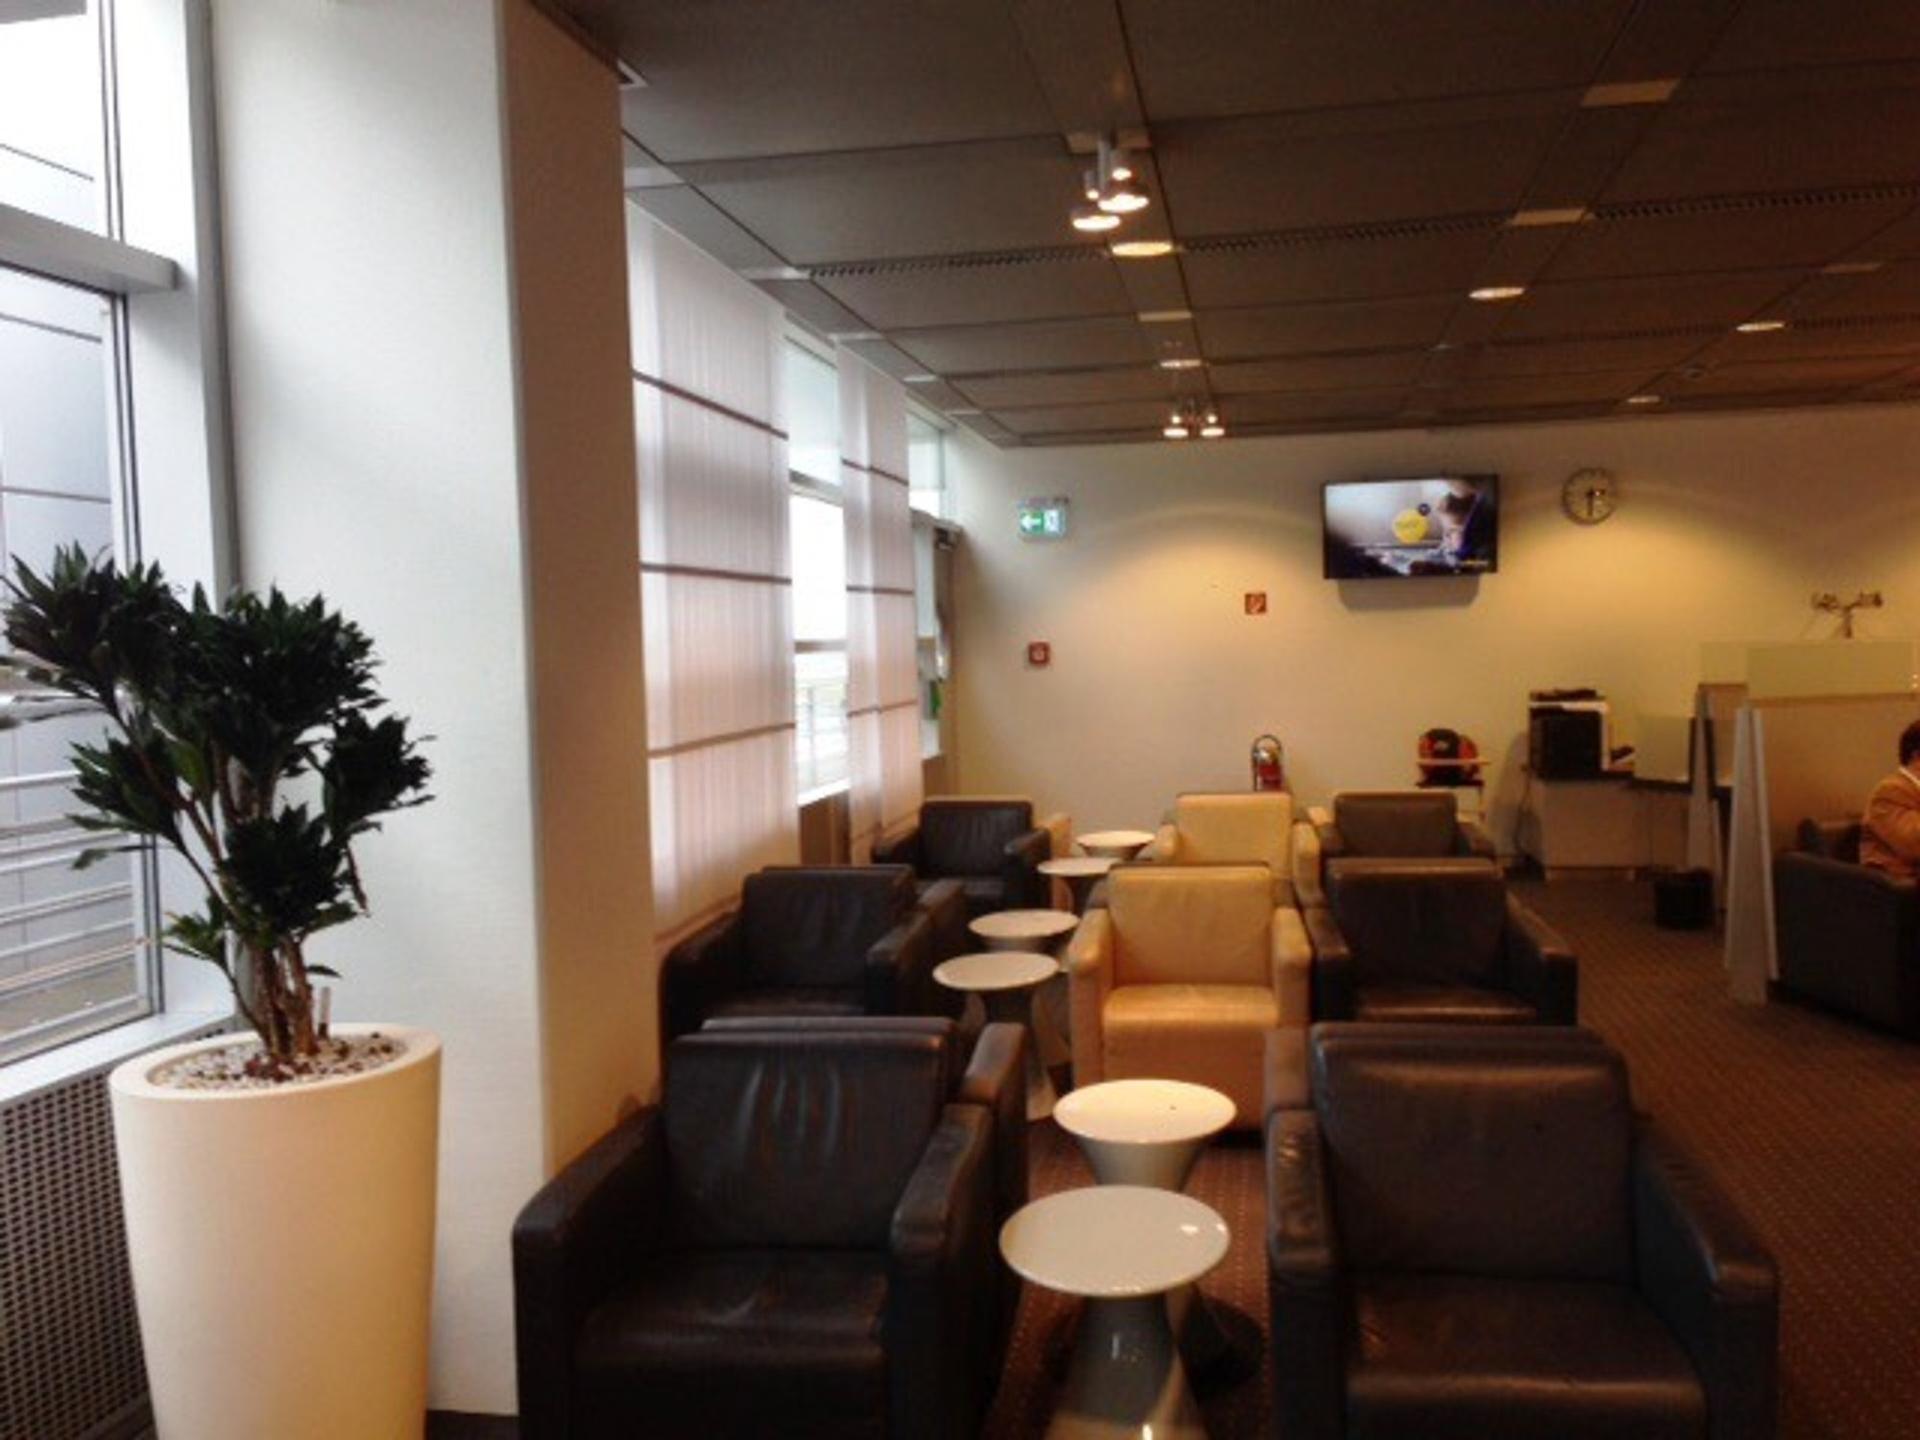 Lufthansa Business Lounge image 6 of 13